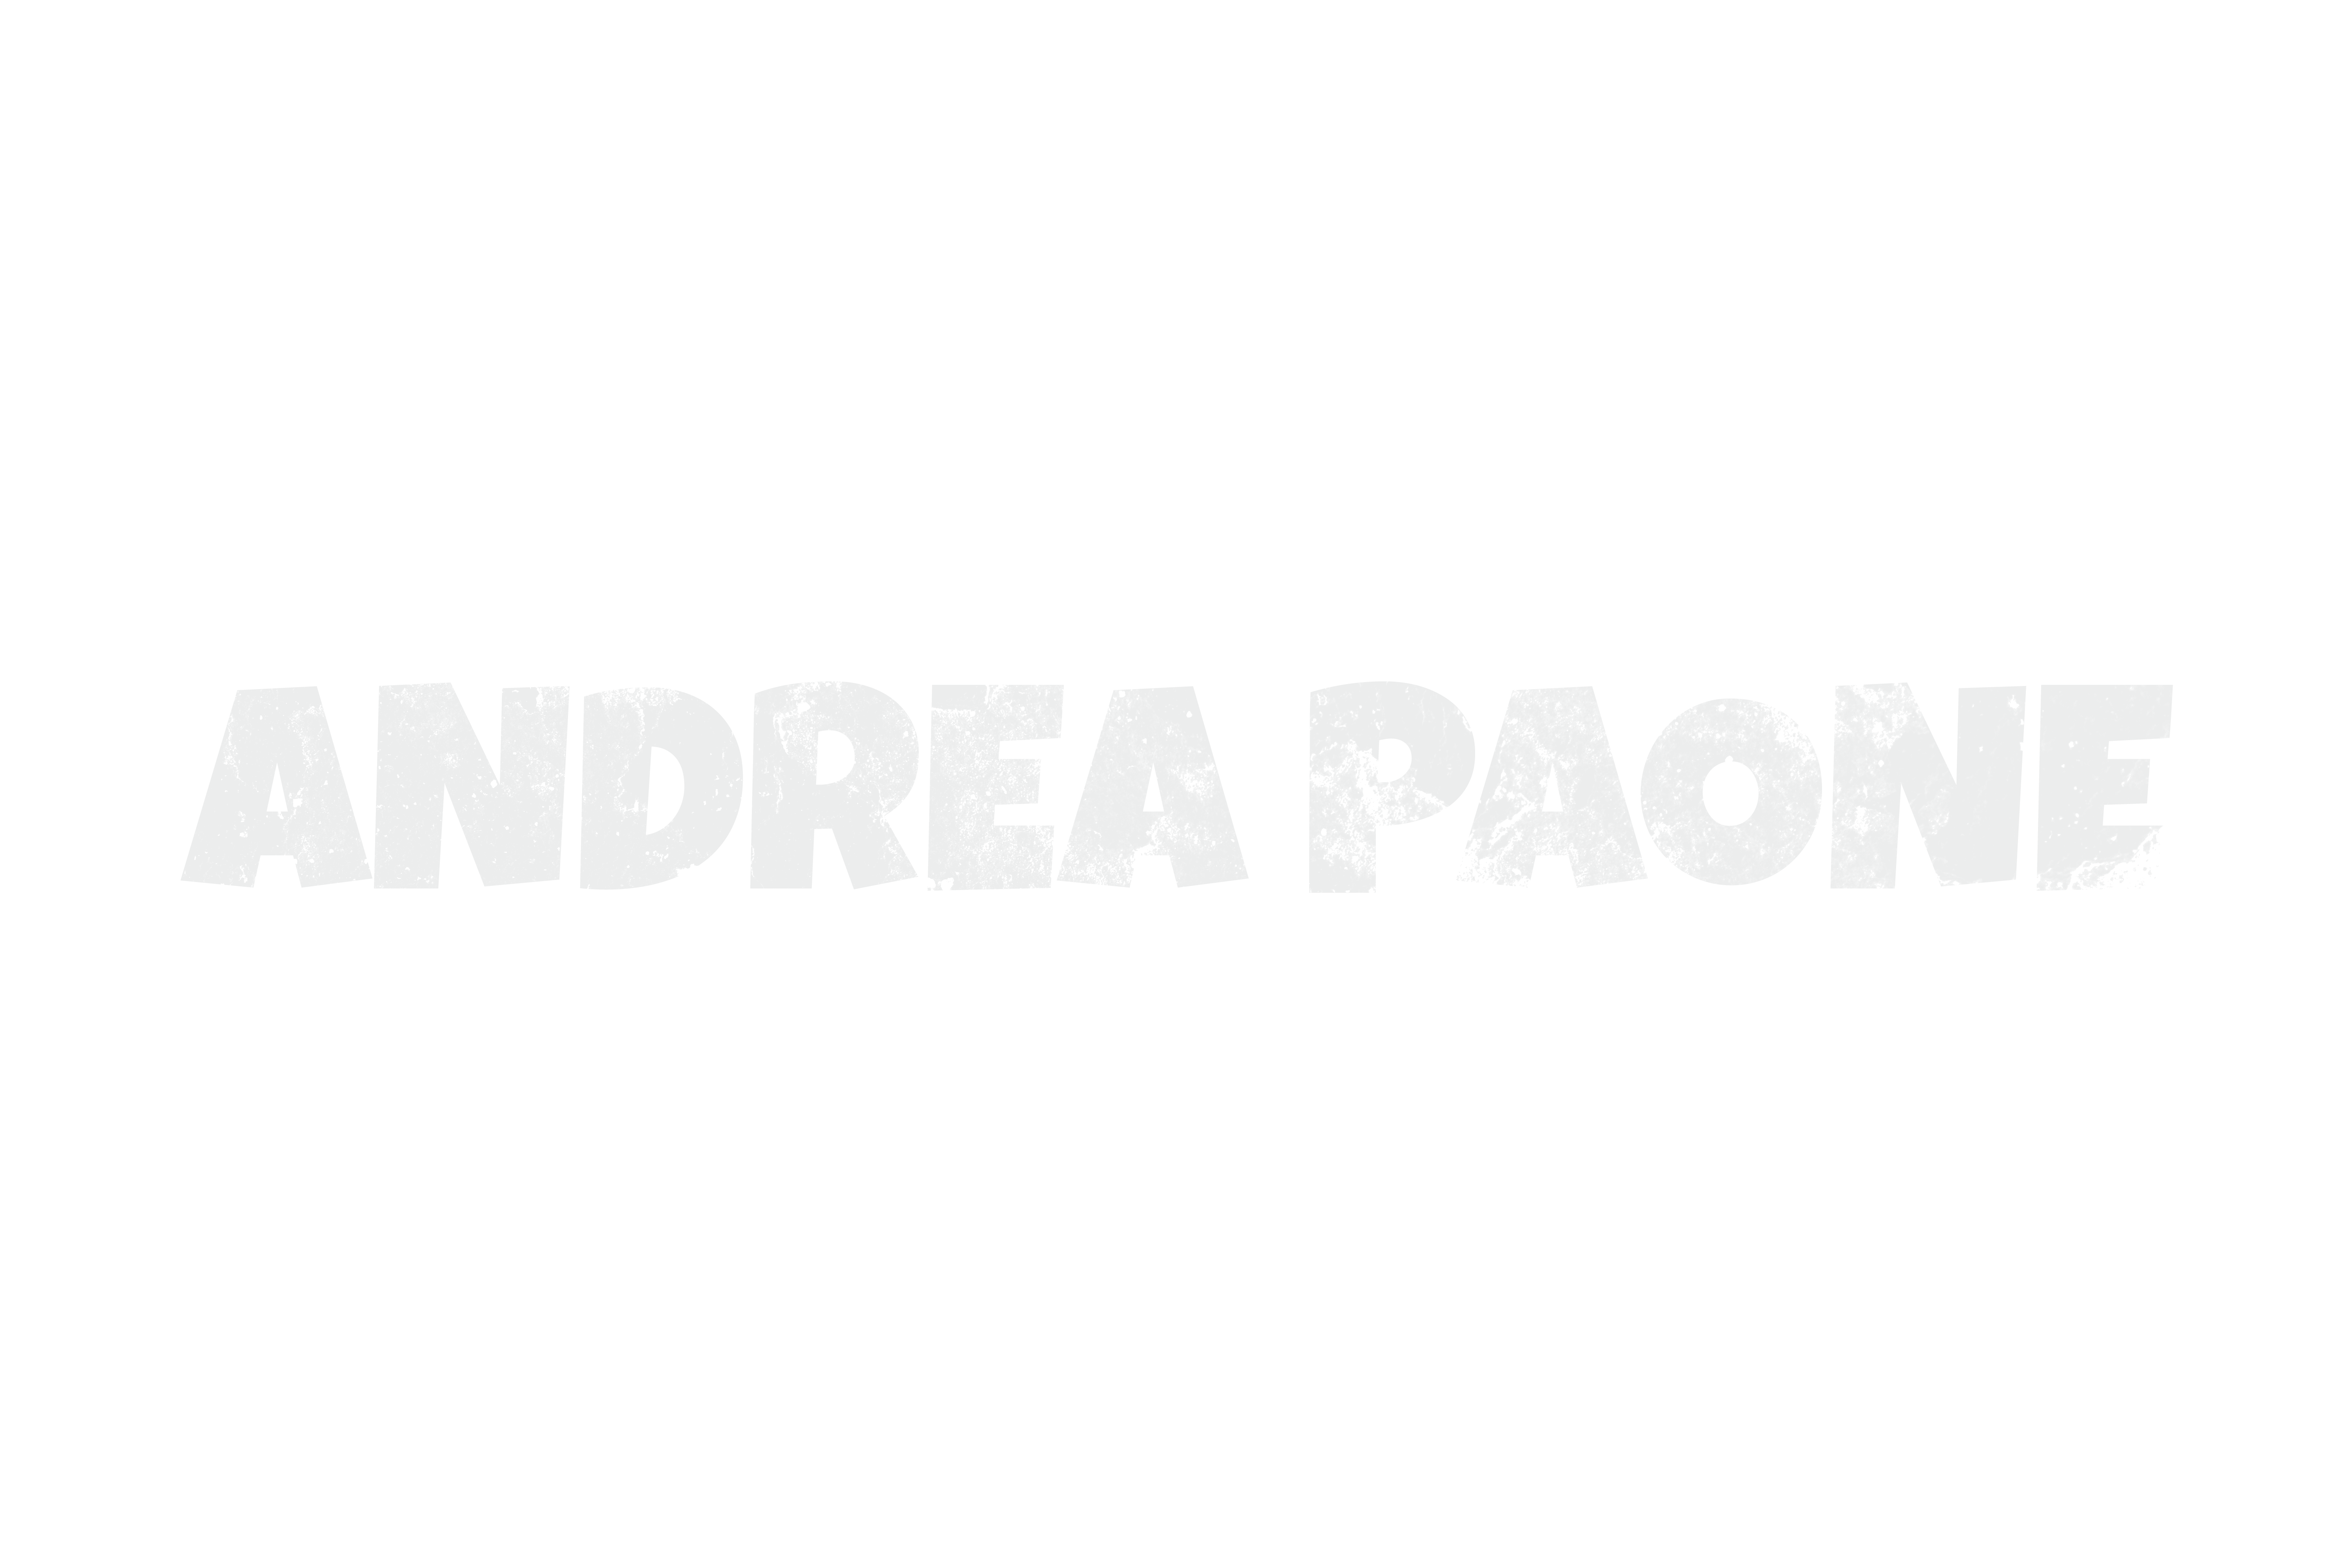 Andrea Paone